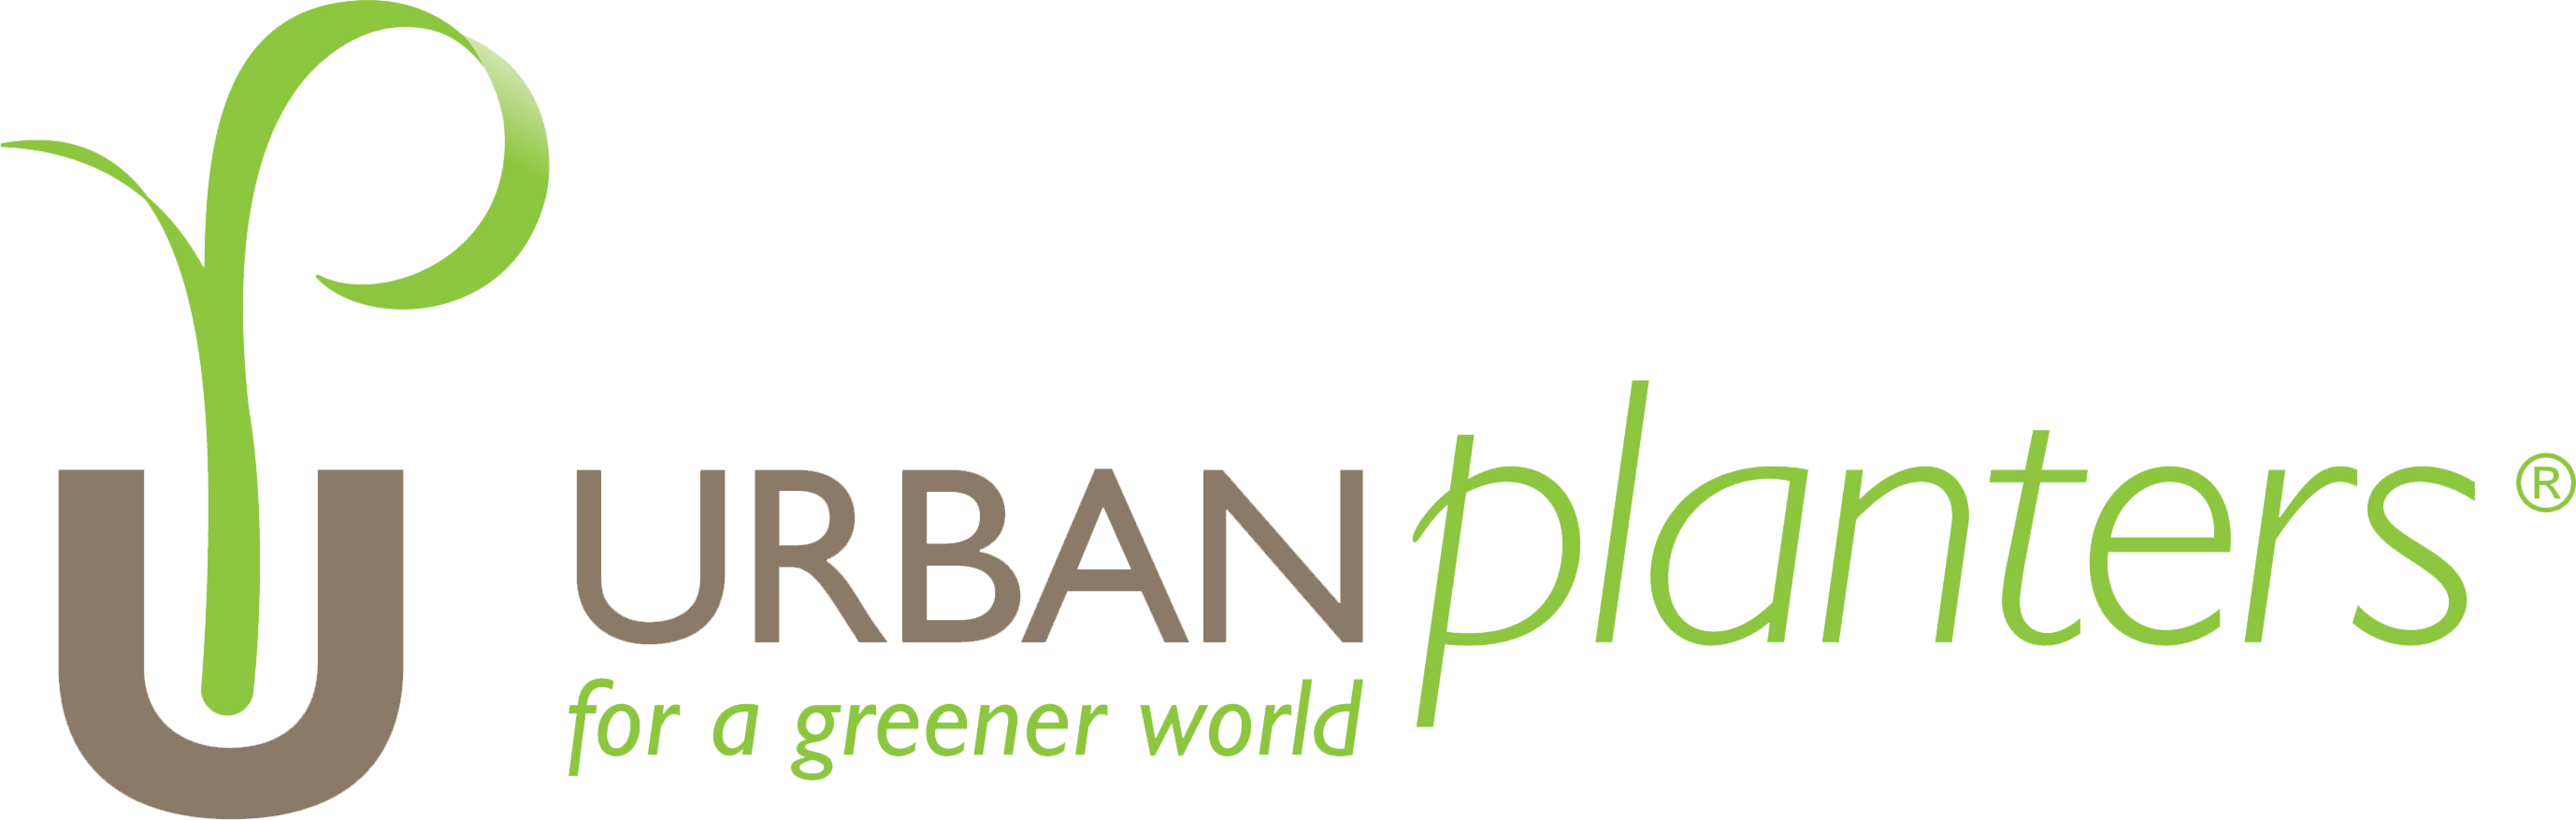 logo for Urban Planters London West